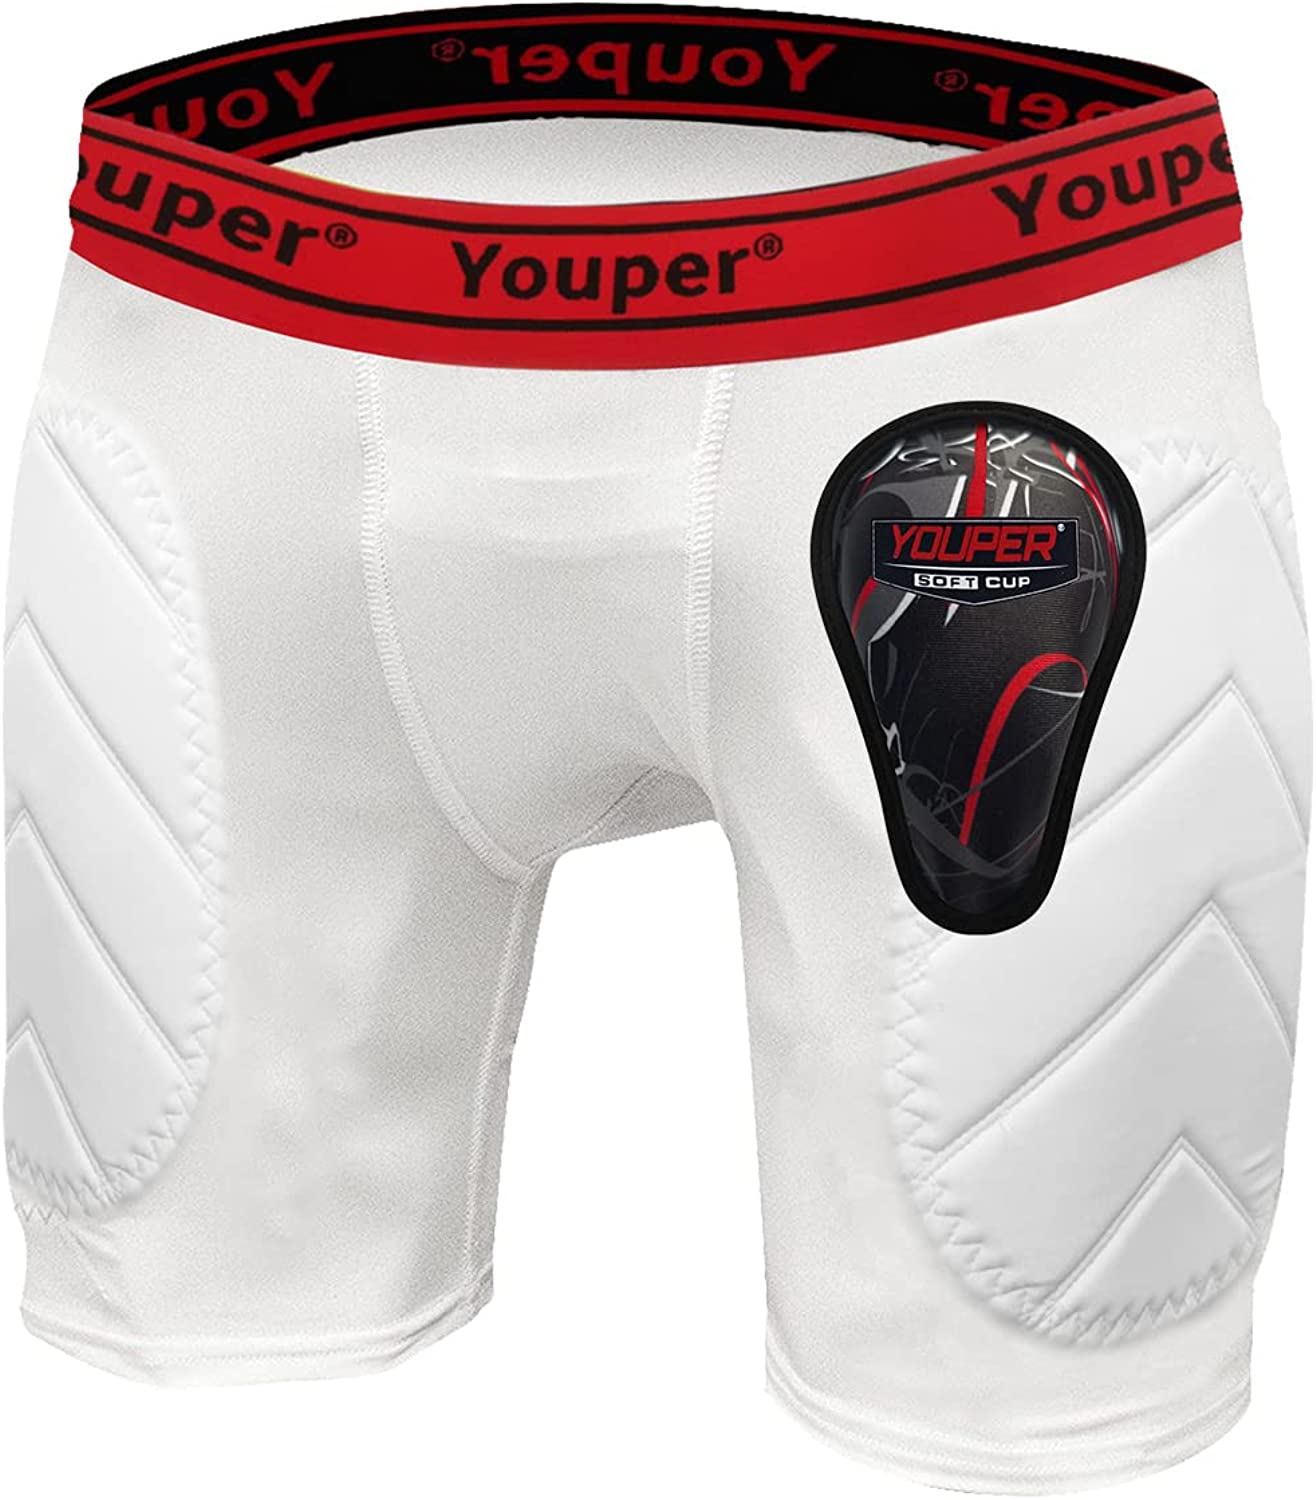  Youper Youth Brief w/Soft Athletic Cup, Boys Underwear w/Baseball  Cup